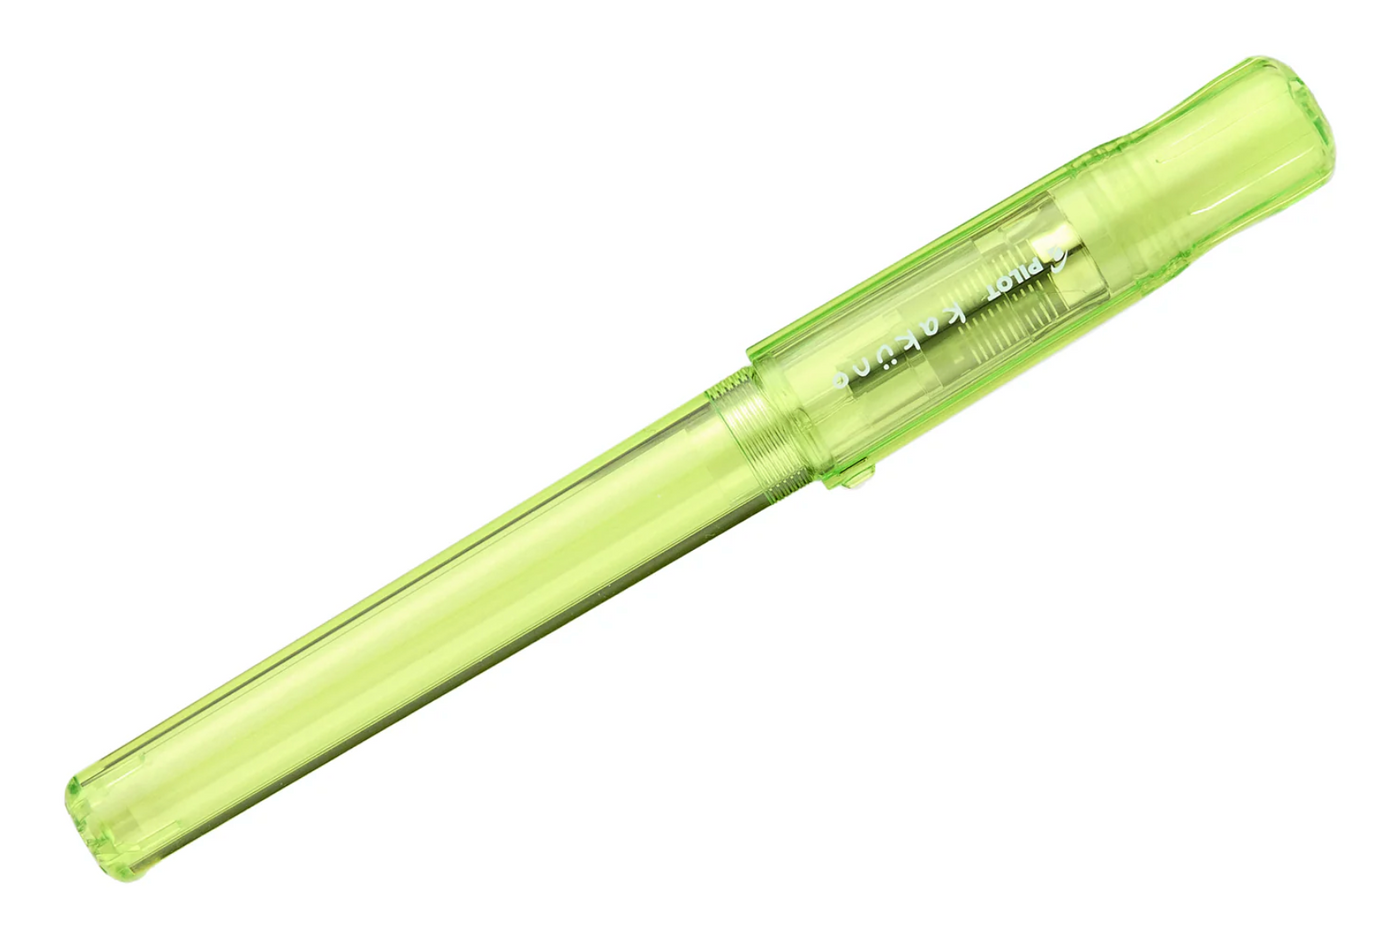 Pilot Kakuno Fountain Pen - Translucent Green capped